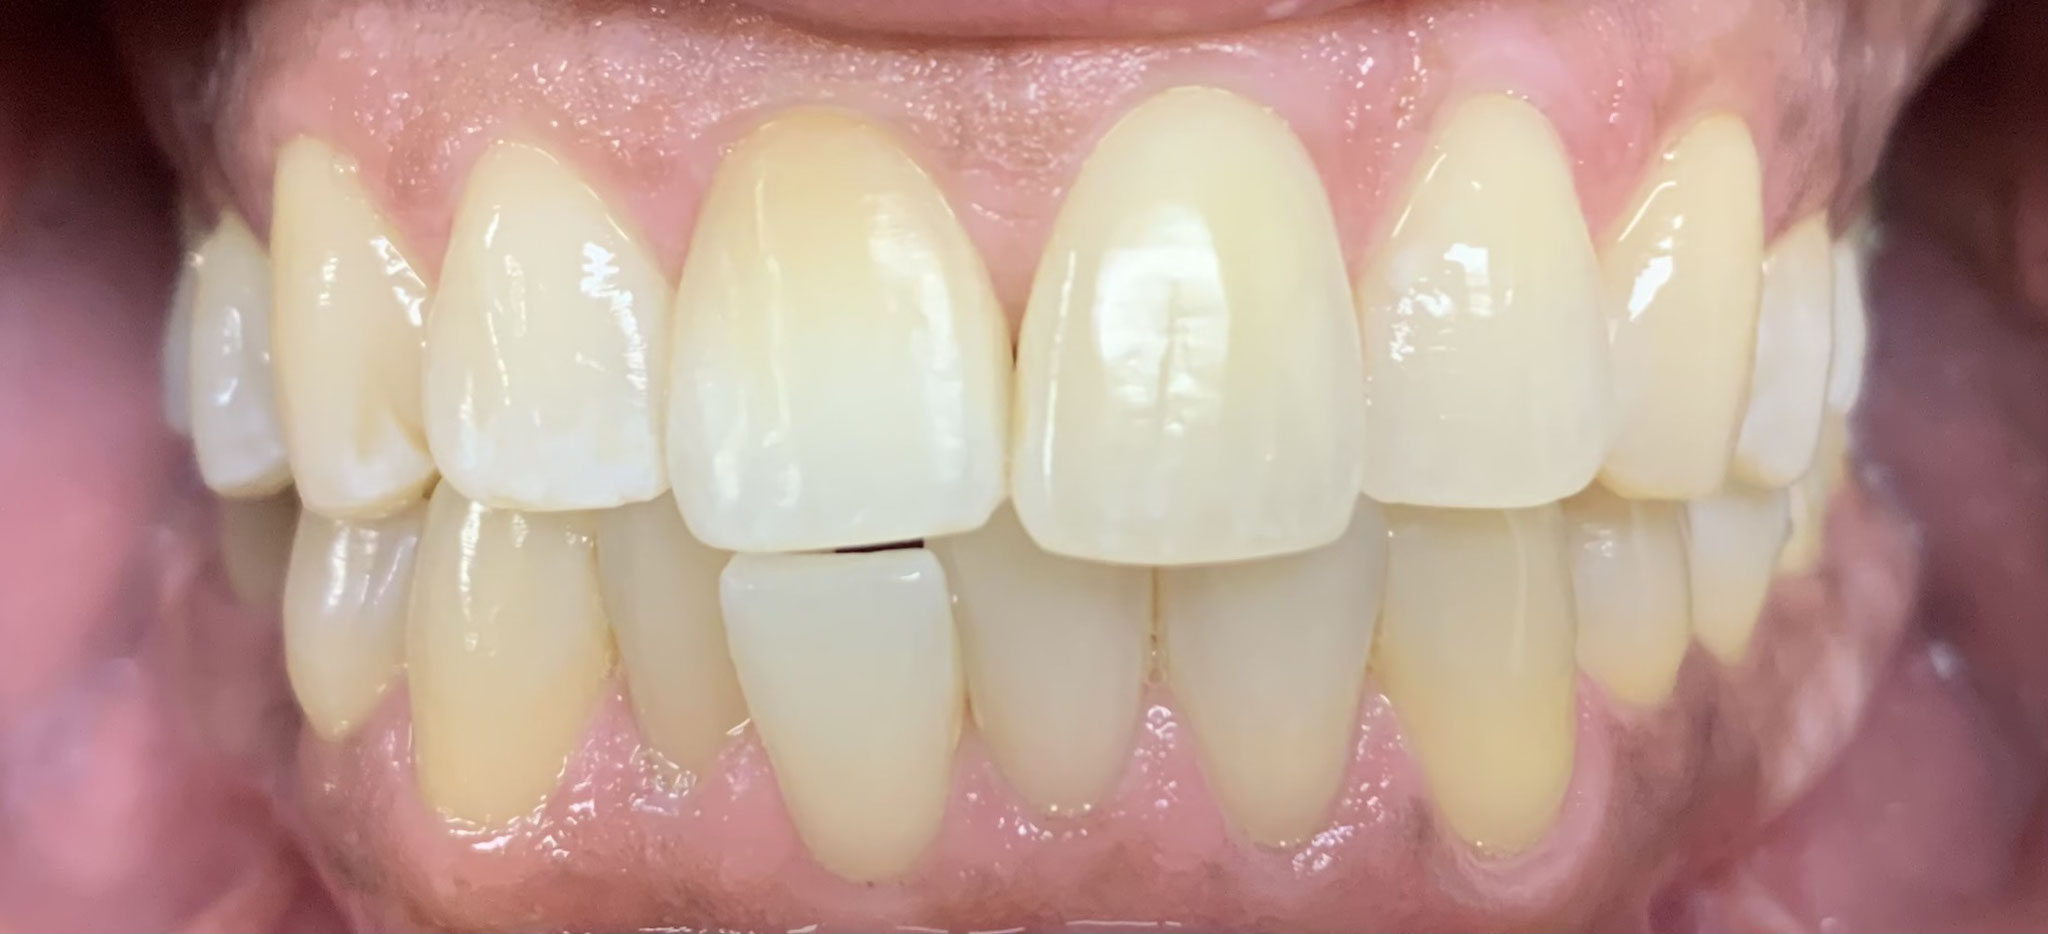 AFTER | Internal whitening dead dark front tooth